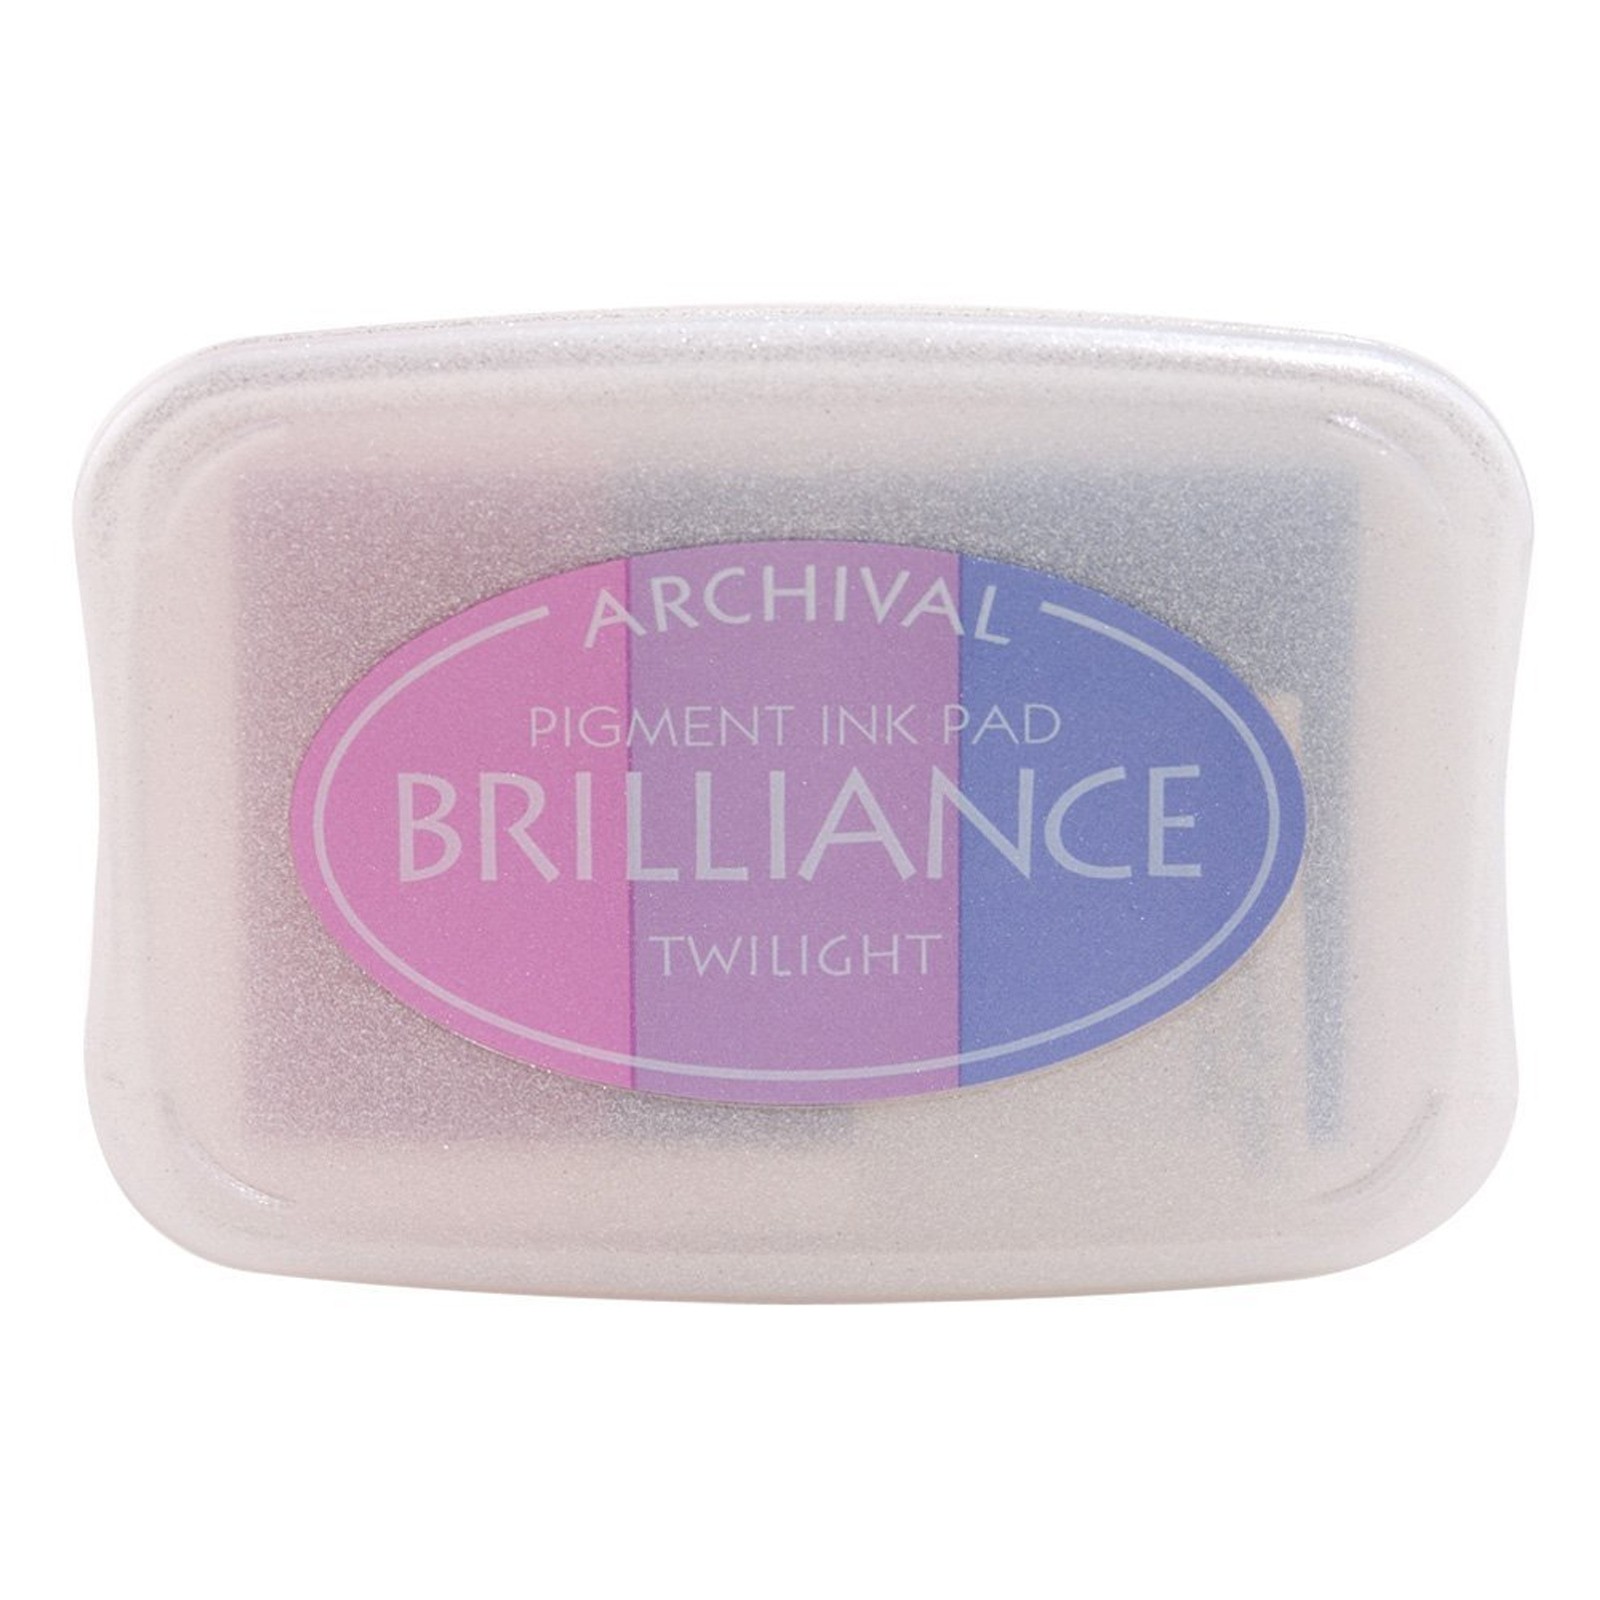 Sale - Twilight Brilliance Pigment Ink Pad